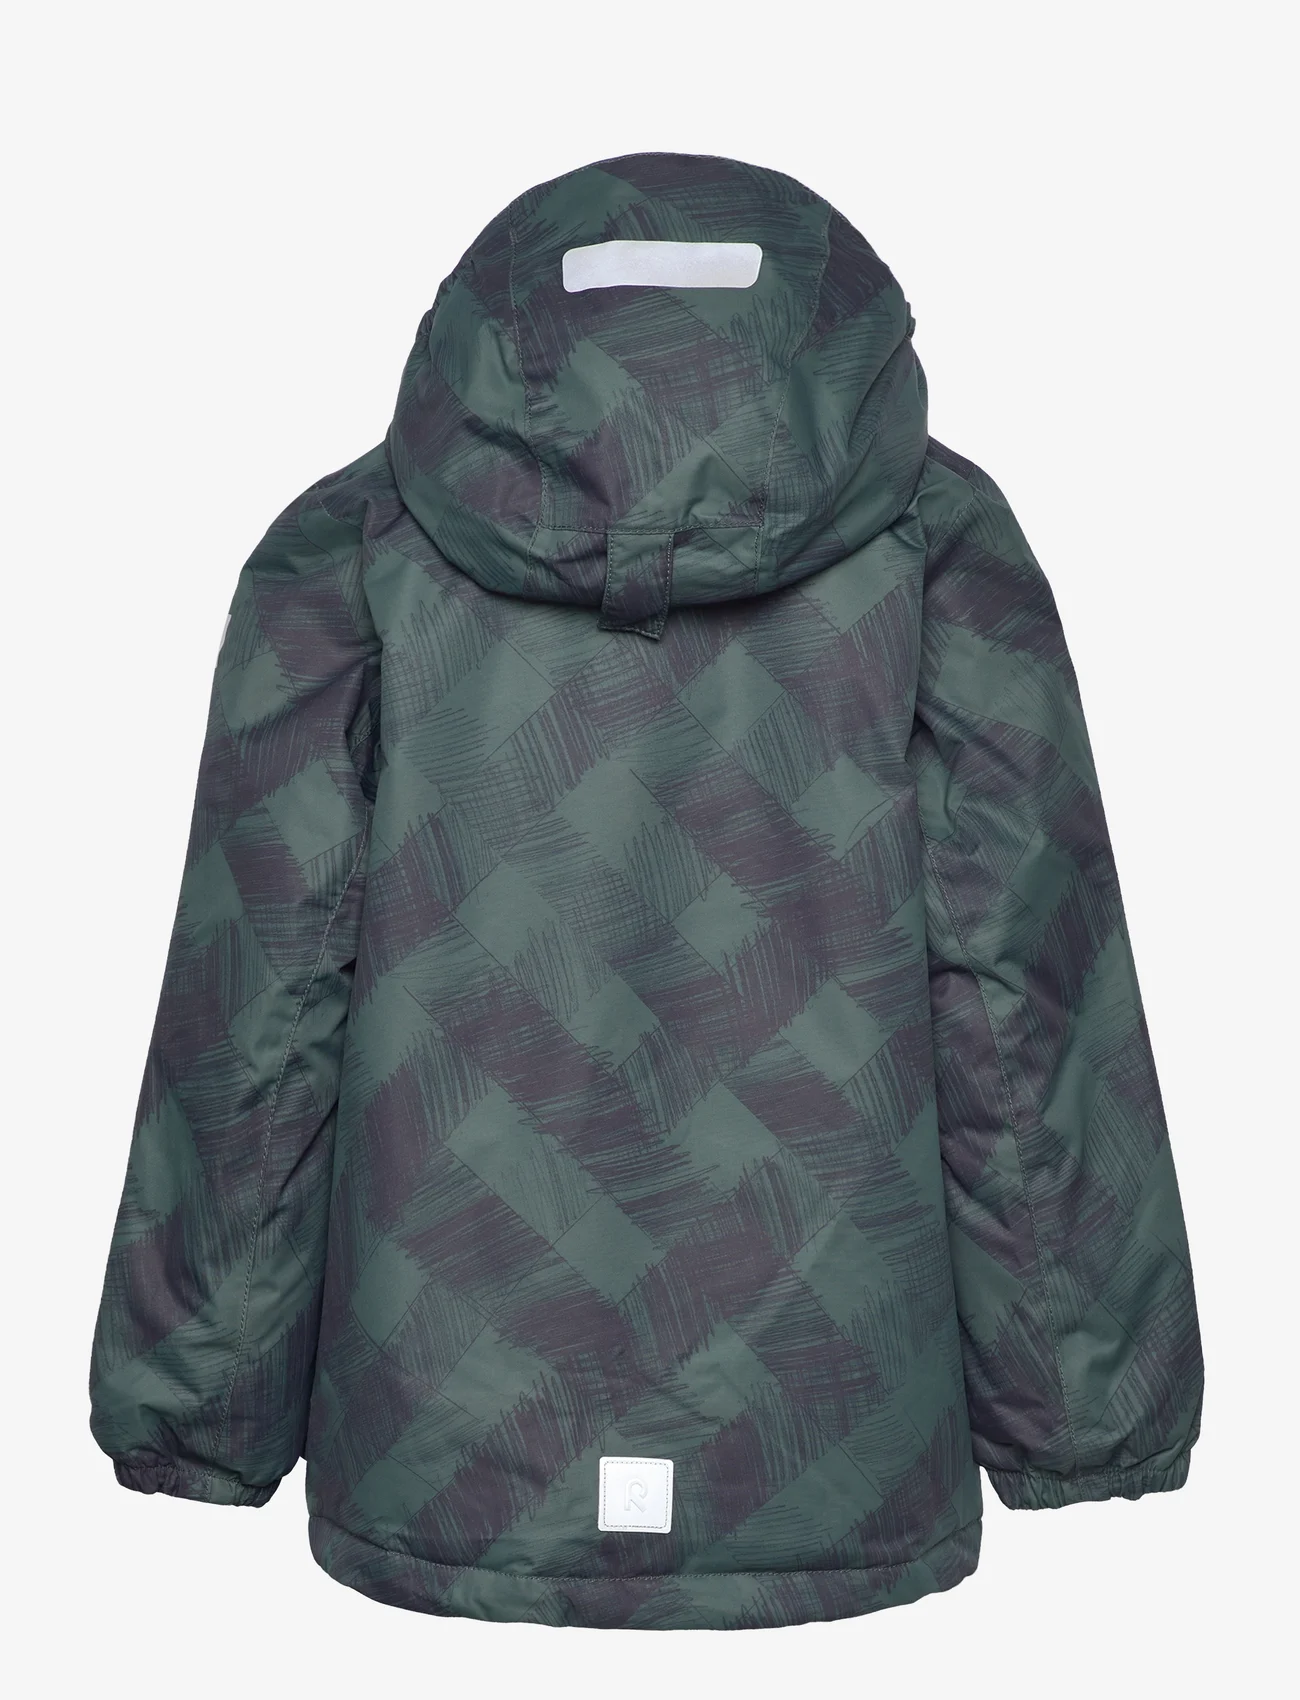 Reima - Winter jacket, Nuotio - winter jackets - thyme green - 1